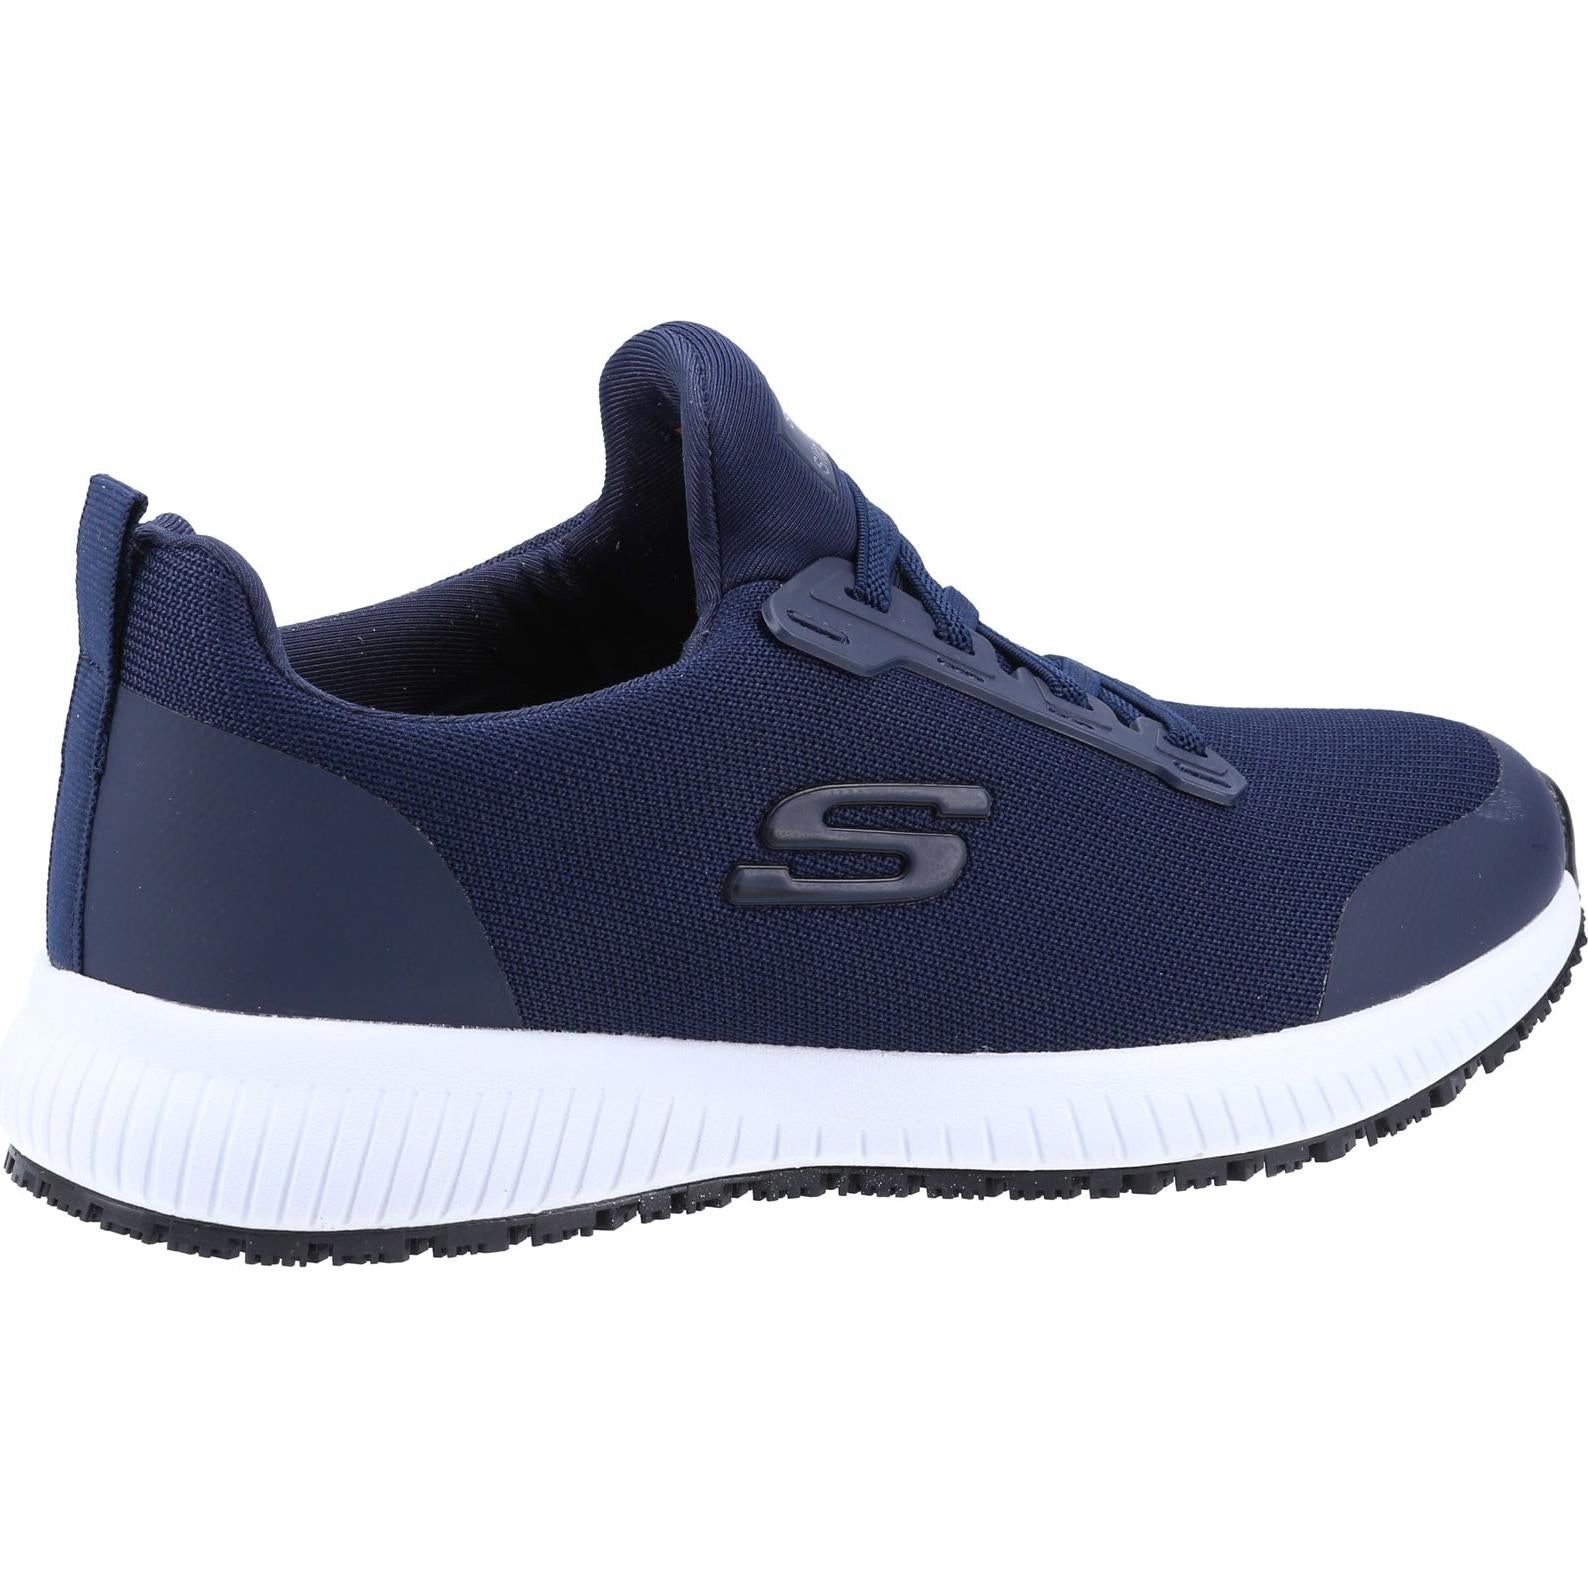 Skechers Squad SR Occupational Shoe